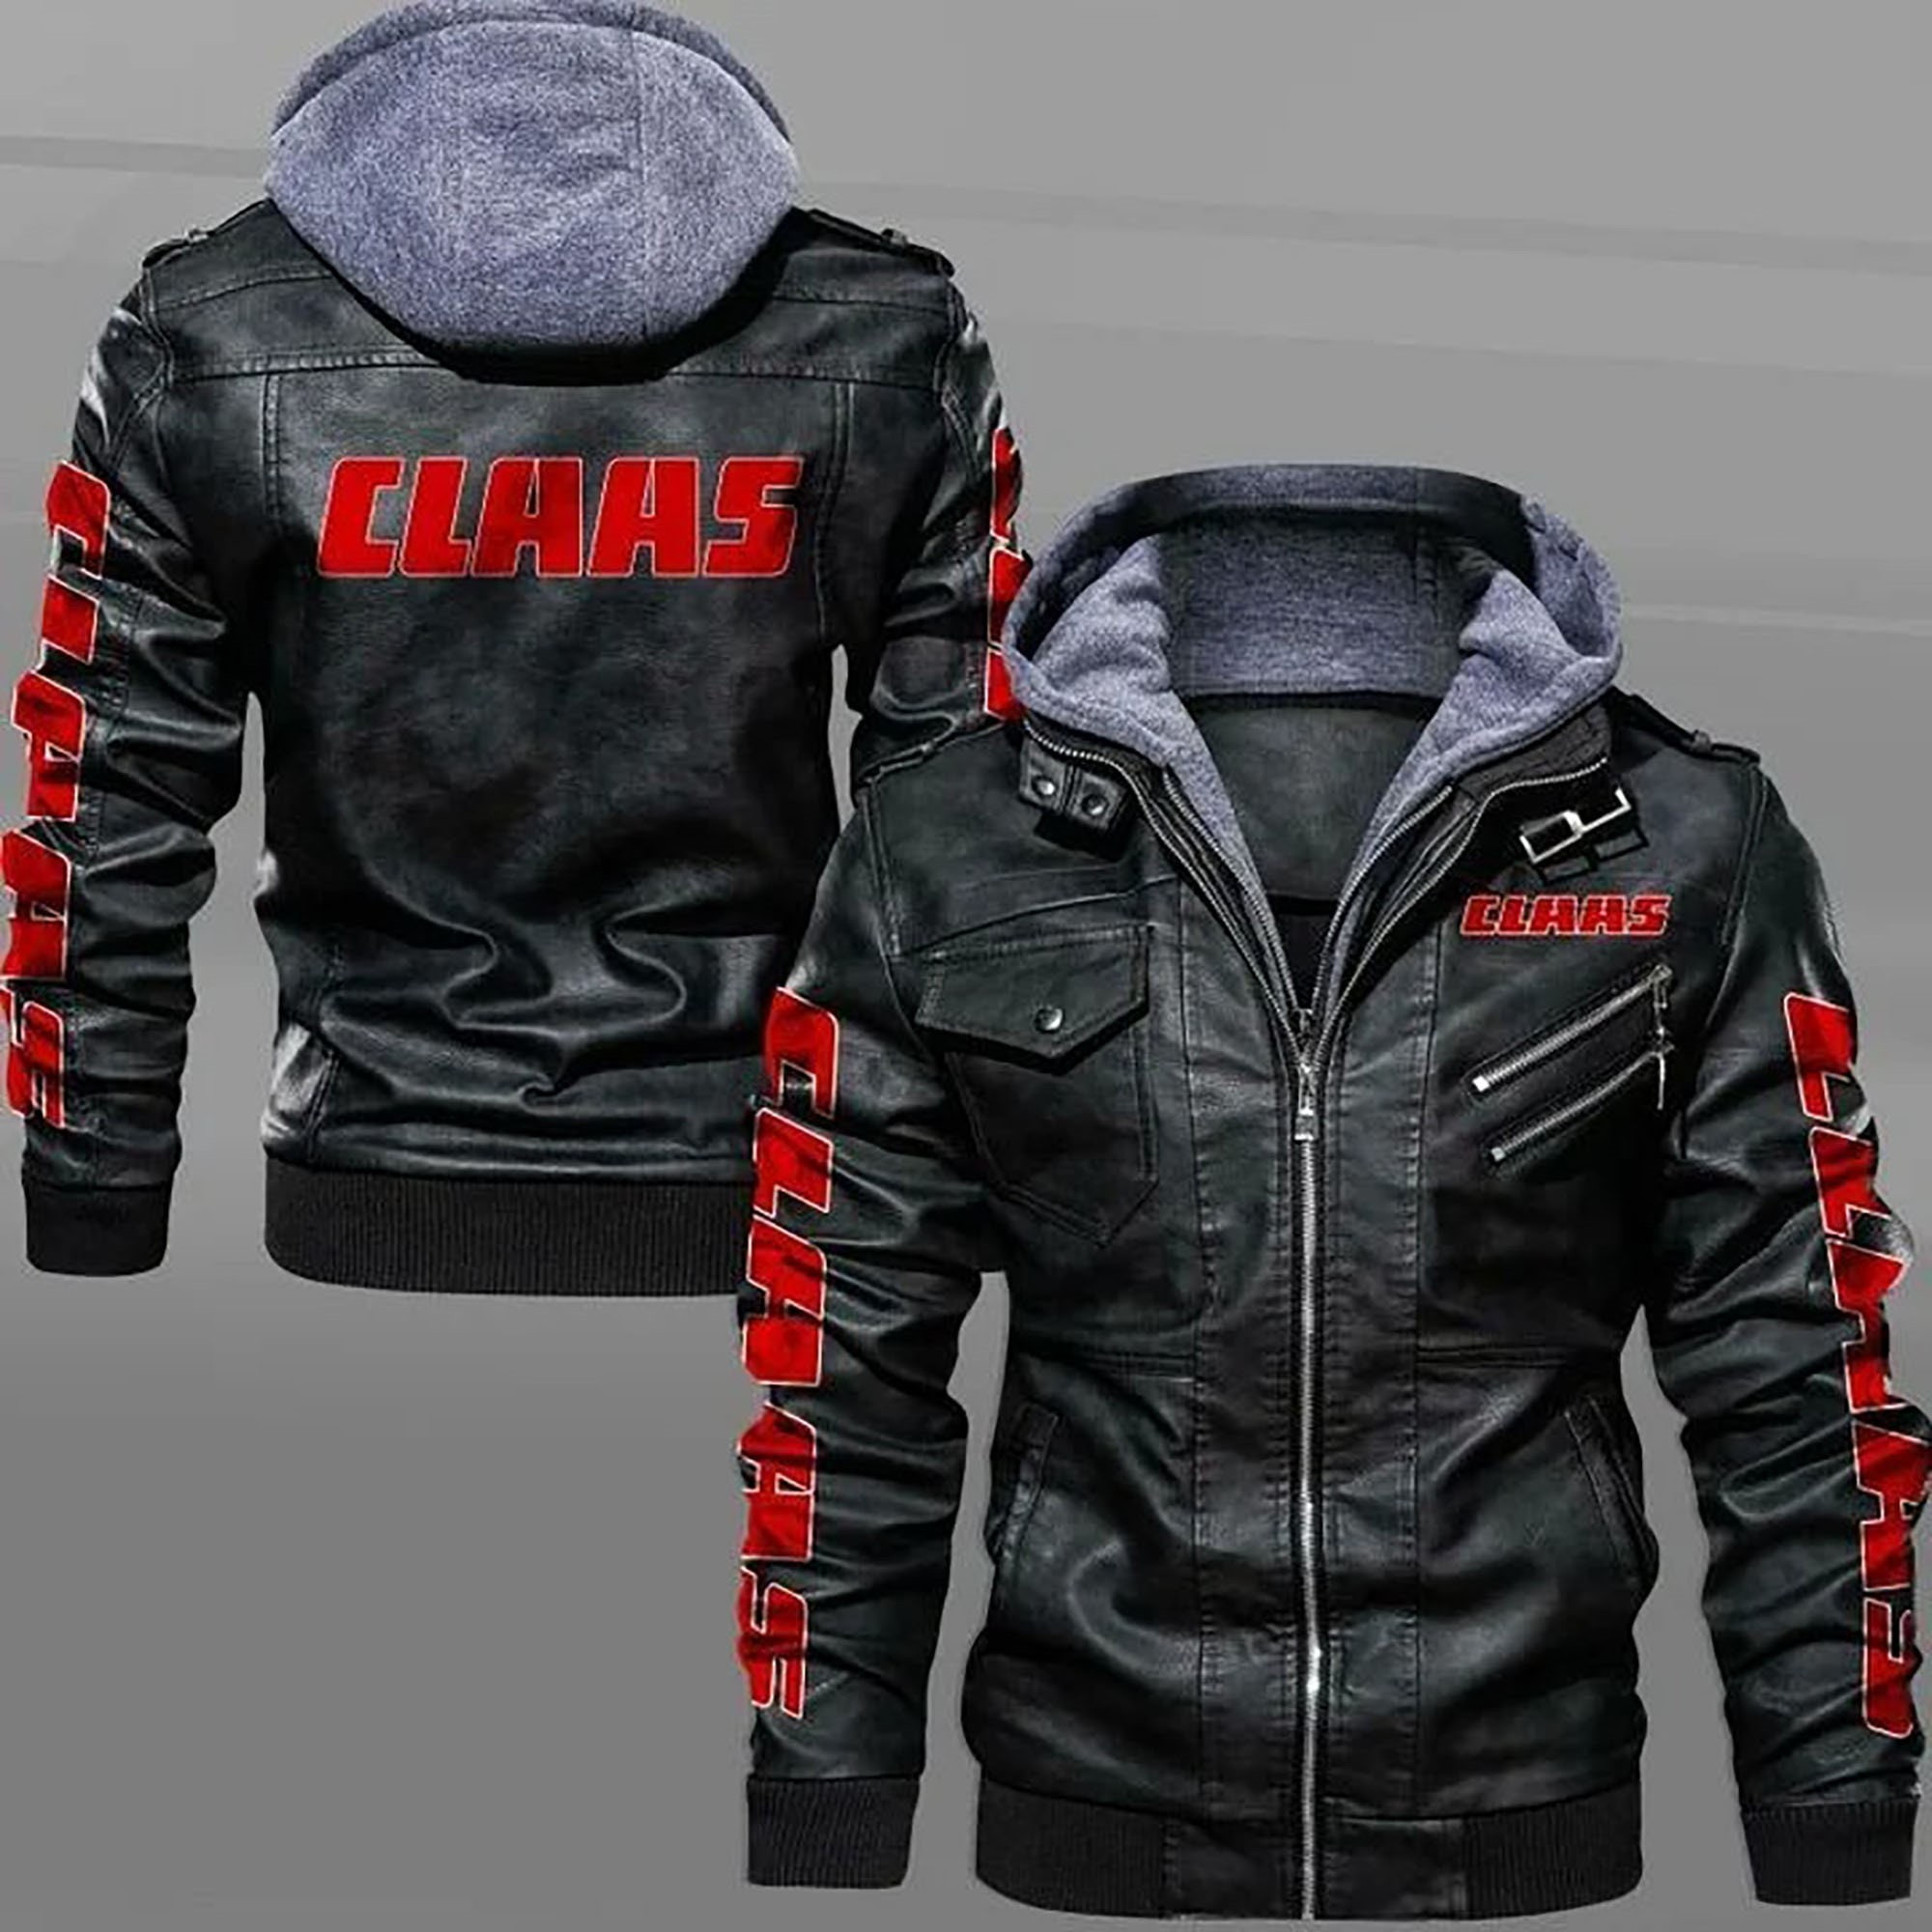 Choosing Leather Jacket that looks good on you below 228